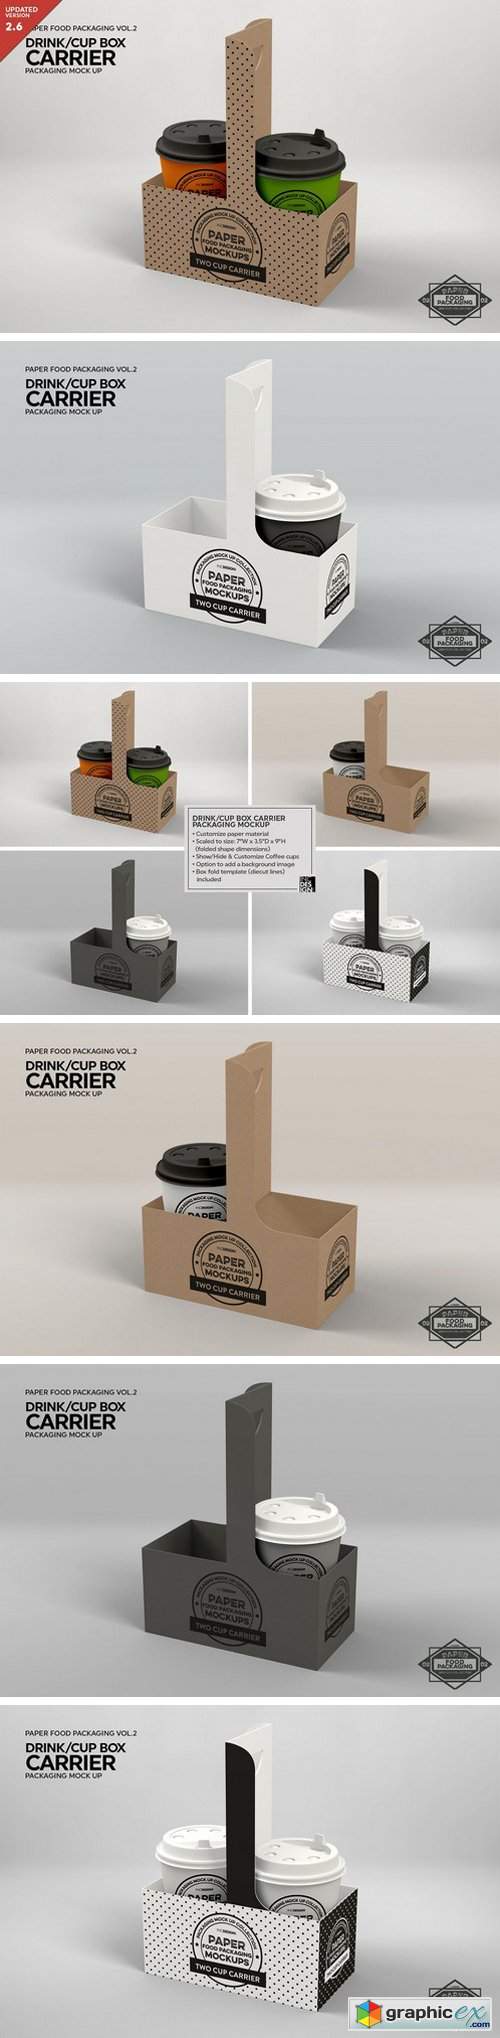 Drink Cup Carrier Packaging Mockup